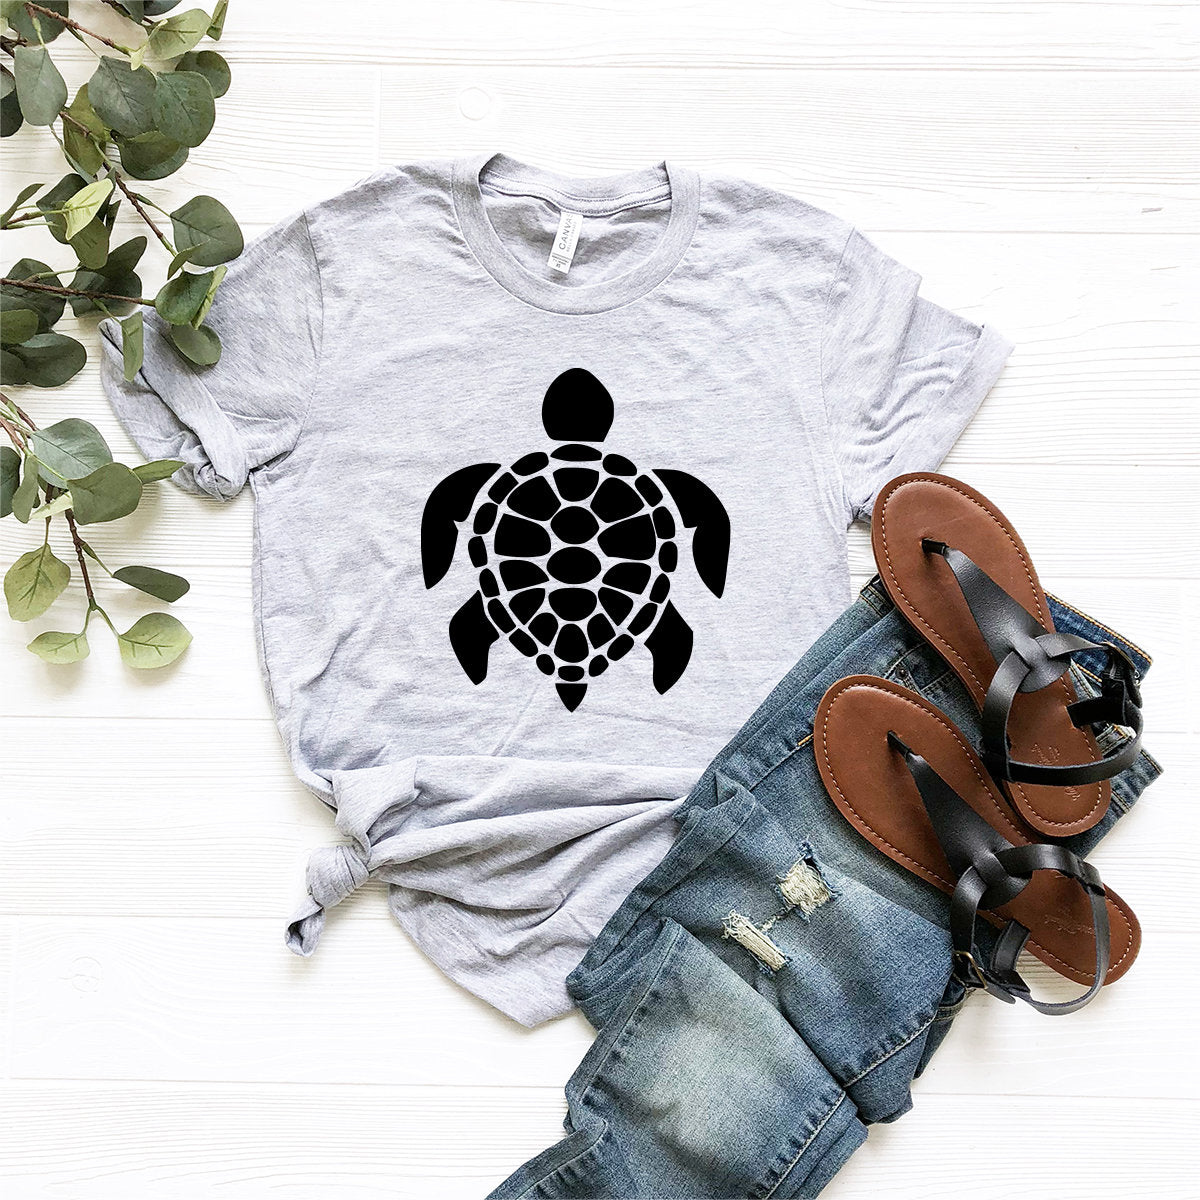 Turtle Tshirt, Turtle Lovers Shirt, Sea Turtle Shirt, Skip A Straw Save A Turtle Shirt, Save The Turtle Shirt, Turtle Graphic Tee - Fastdeliverytees.com